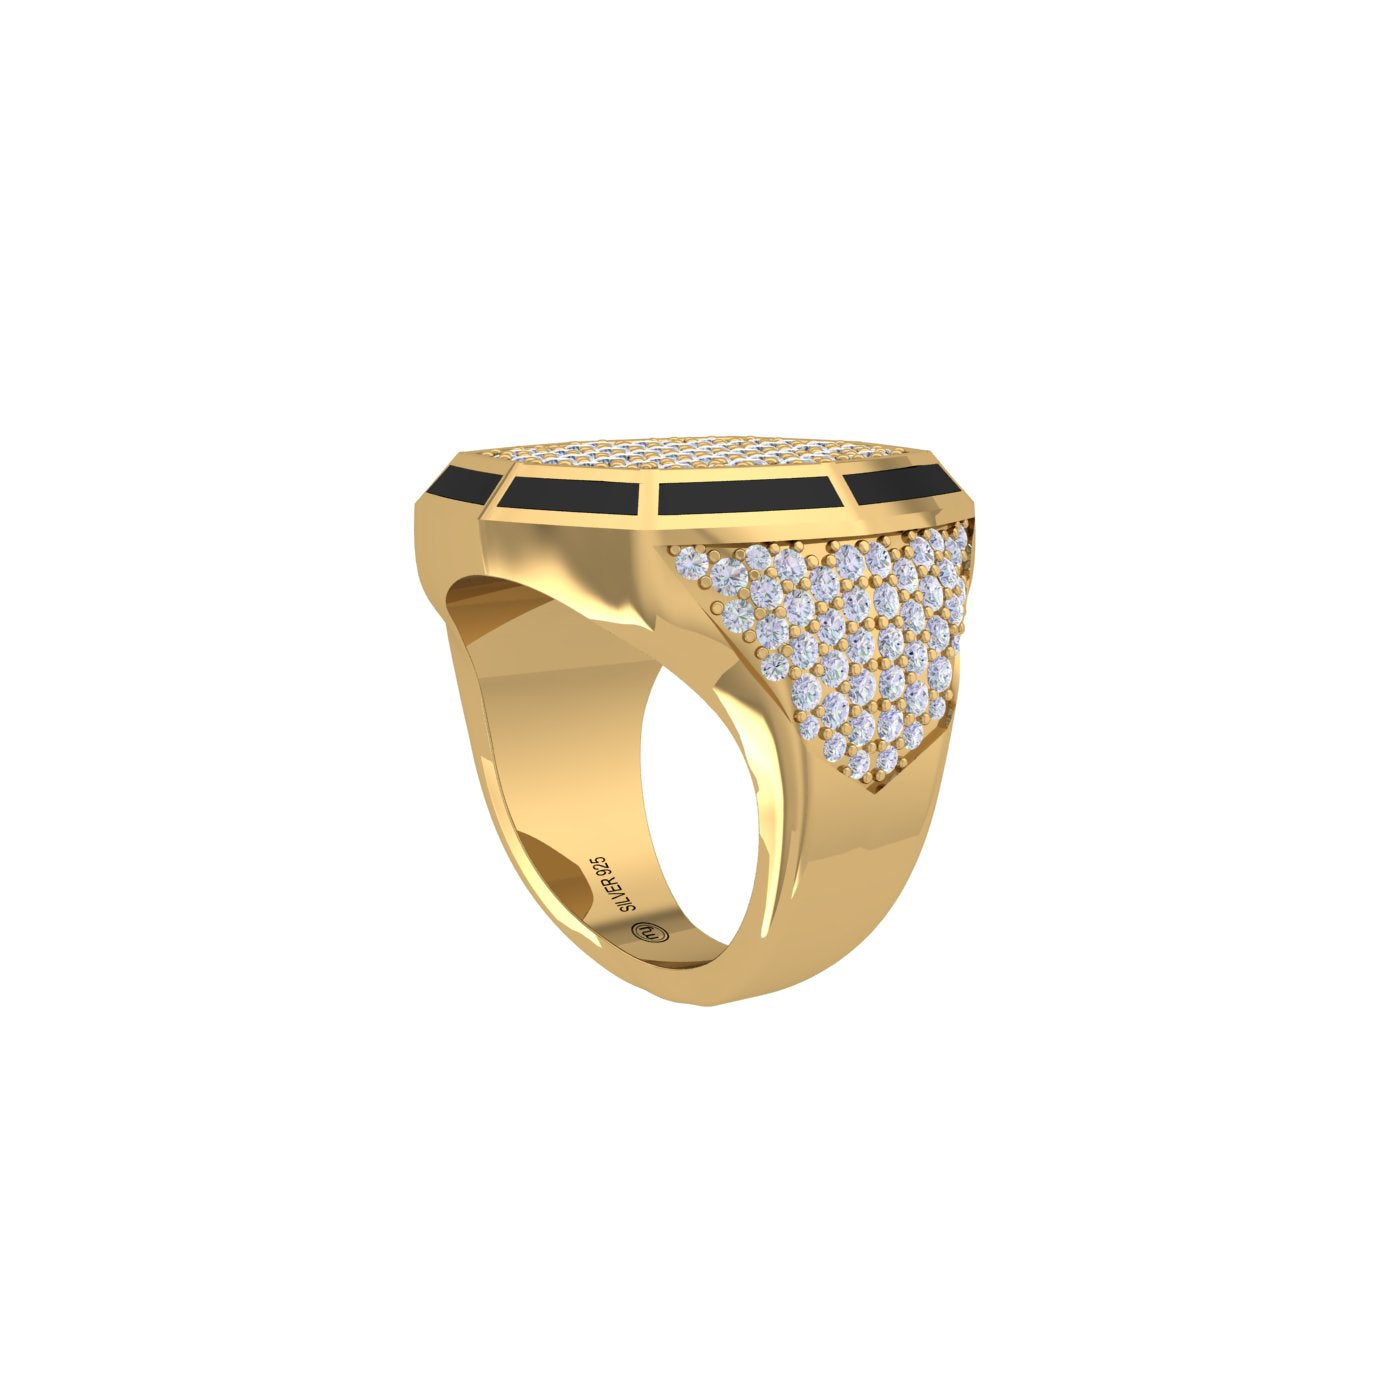 The Ikaika Men's Ring